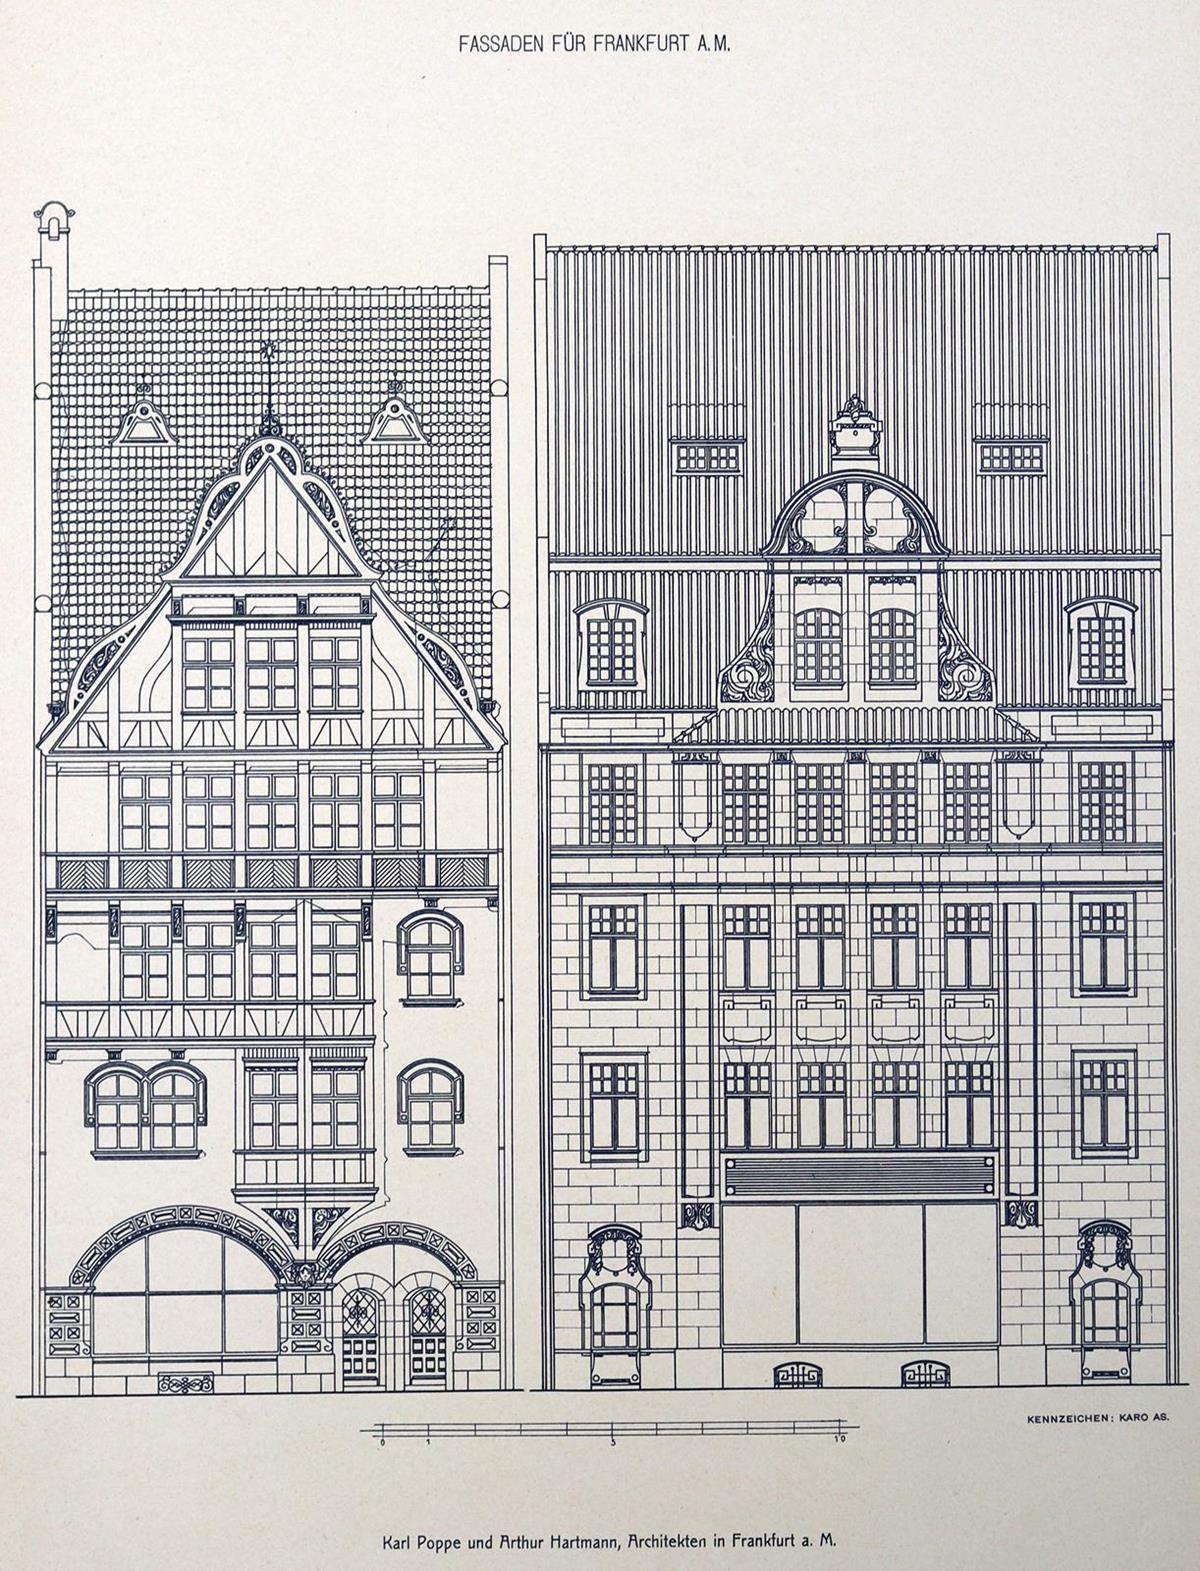 Fassaden für Frankfurt am Main. | Bild Nr.2